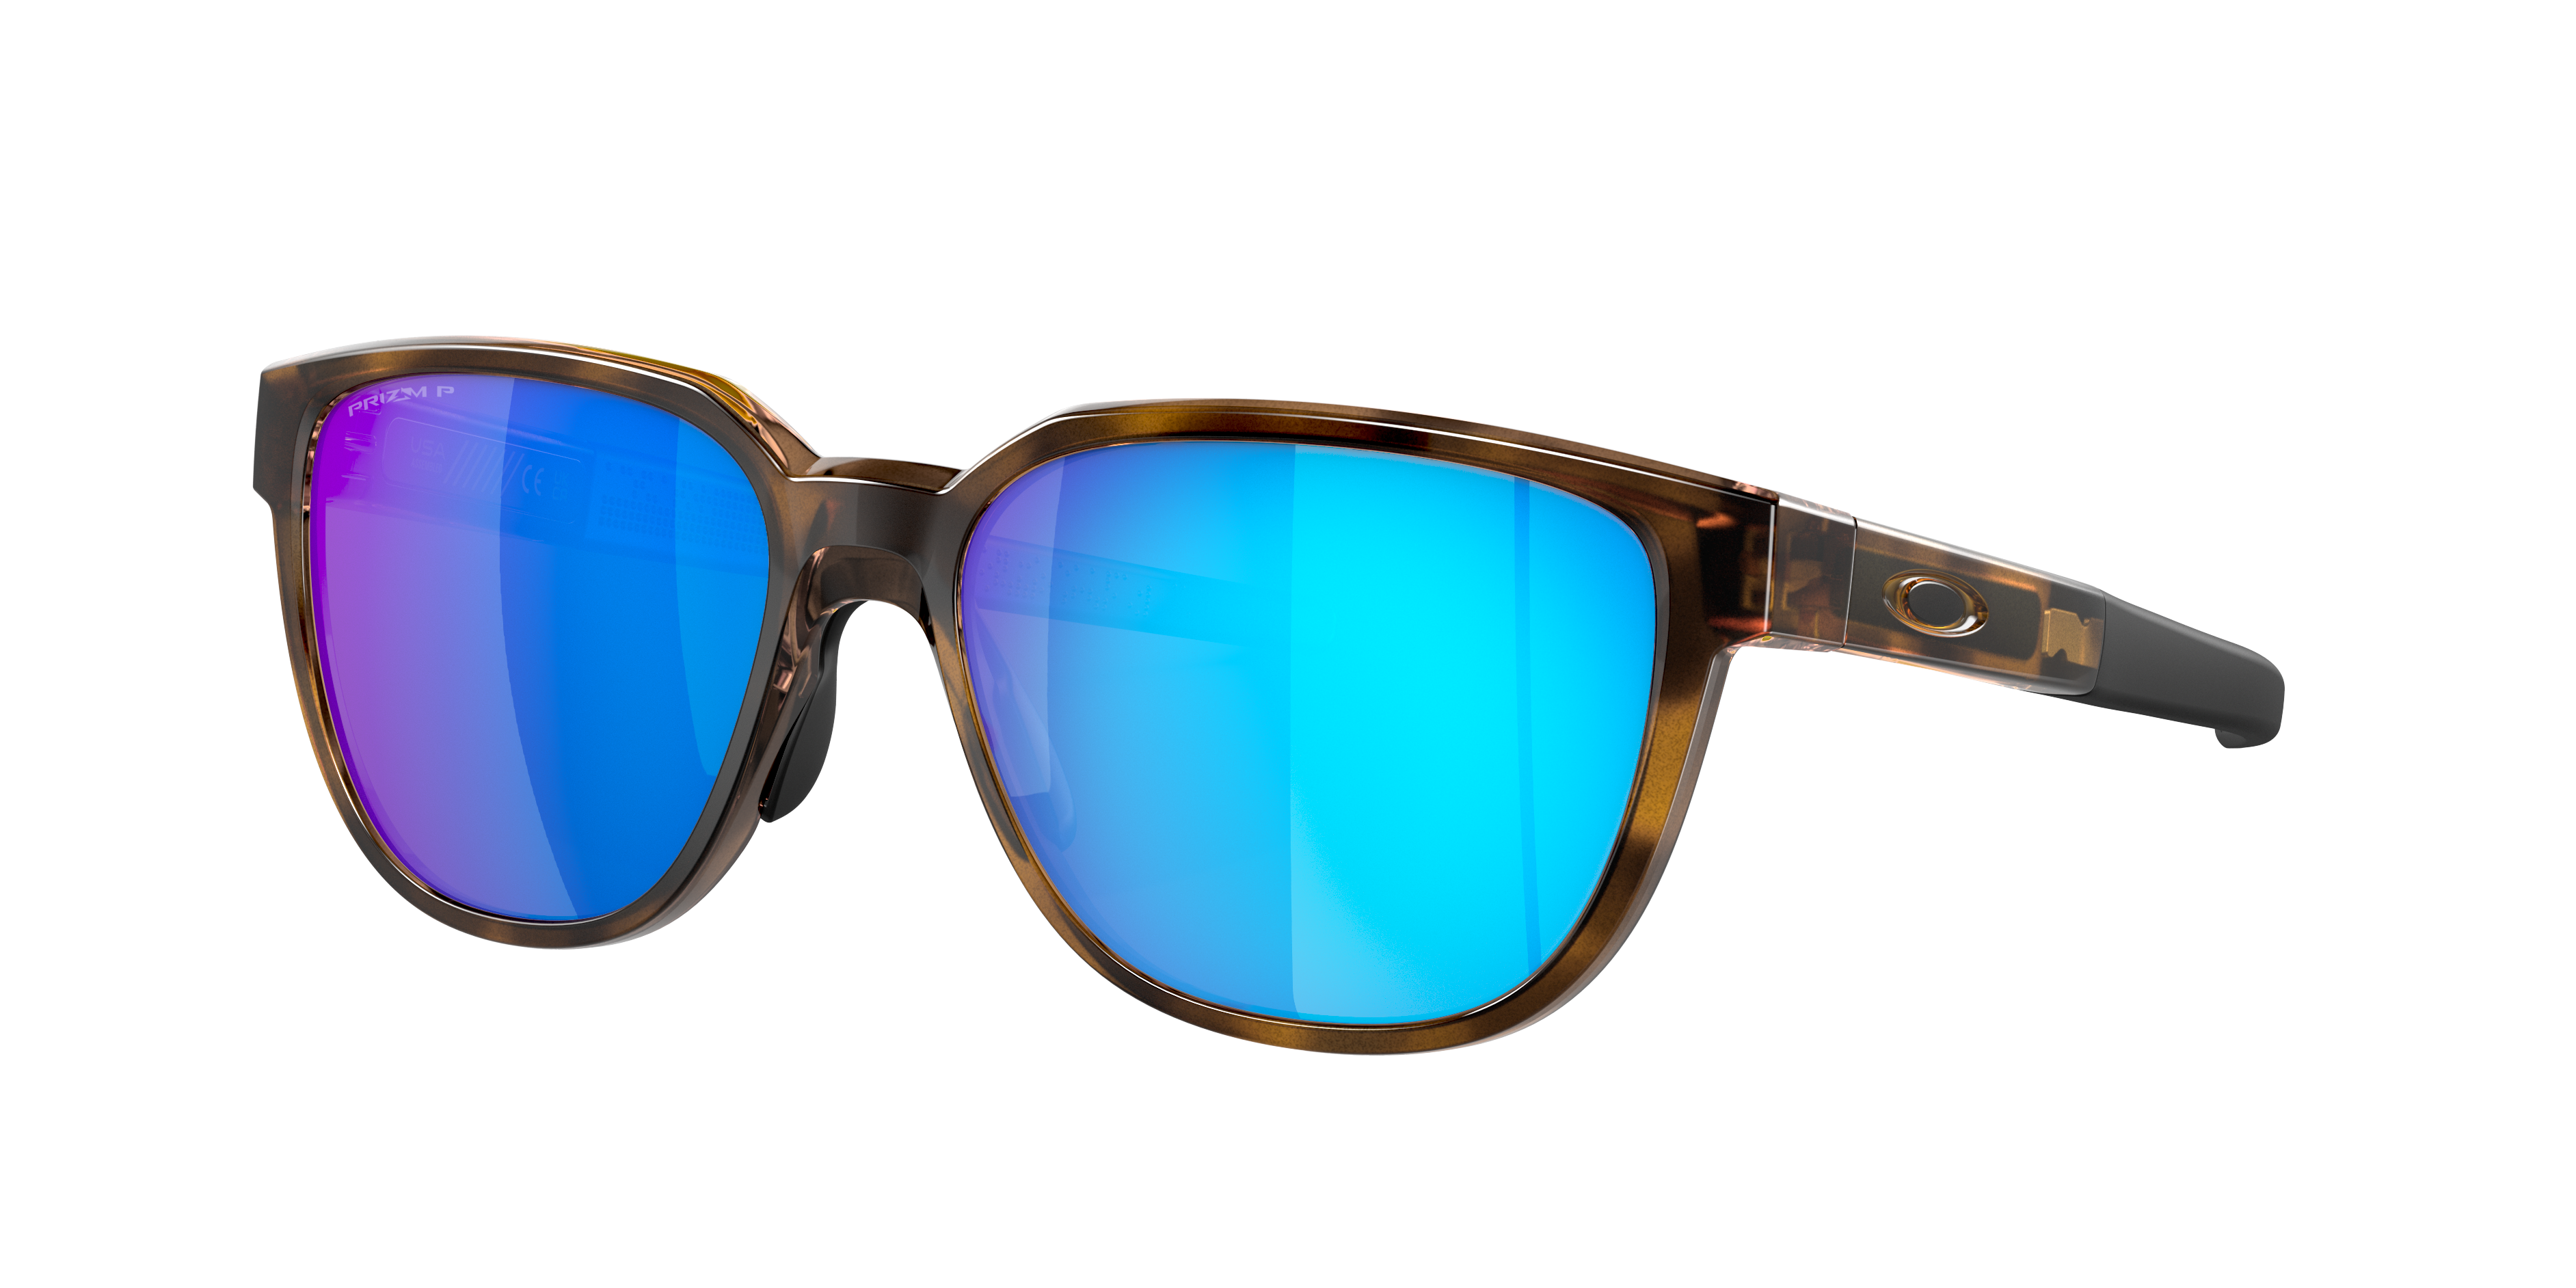 GALAXYLENSE Air Soft Sport Military Eye Protection Glasses - Baseball High  Impact Resistant Sunglasses - Motorcycle Glasses - Provide Polarized UV